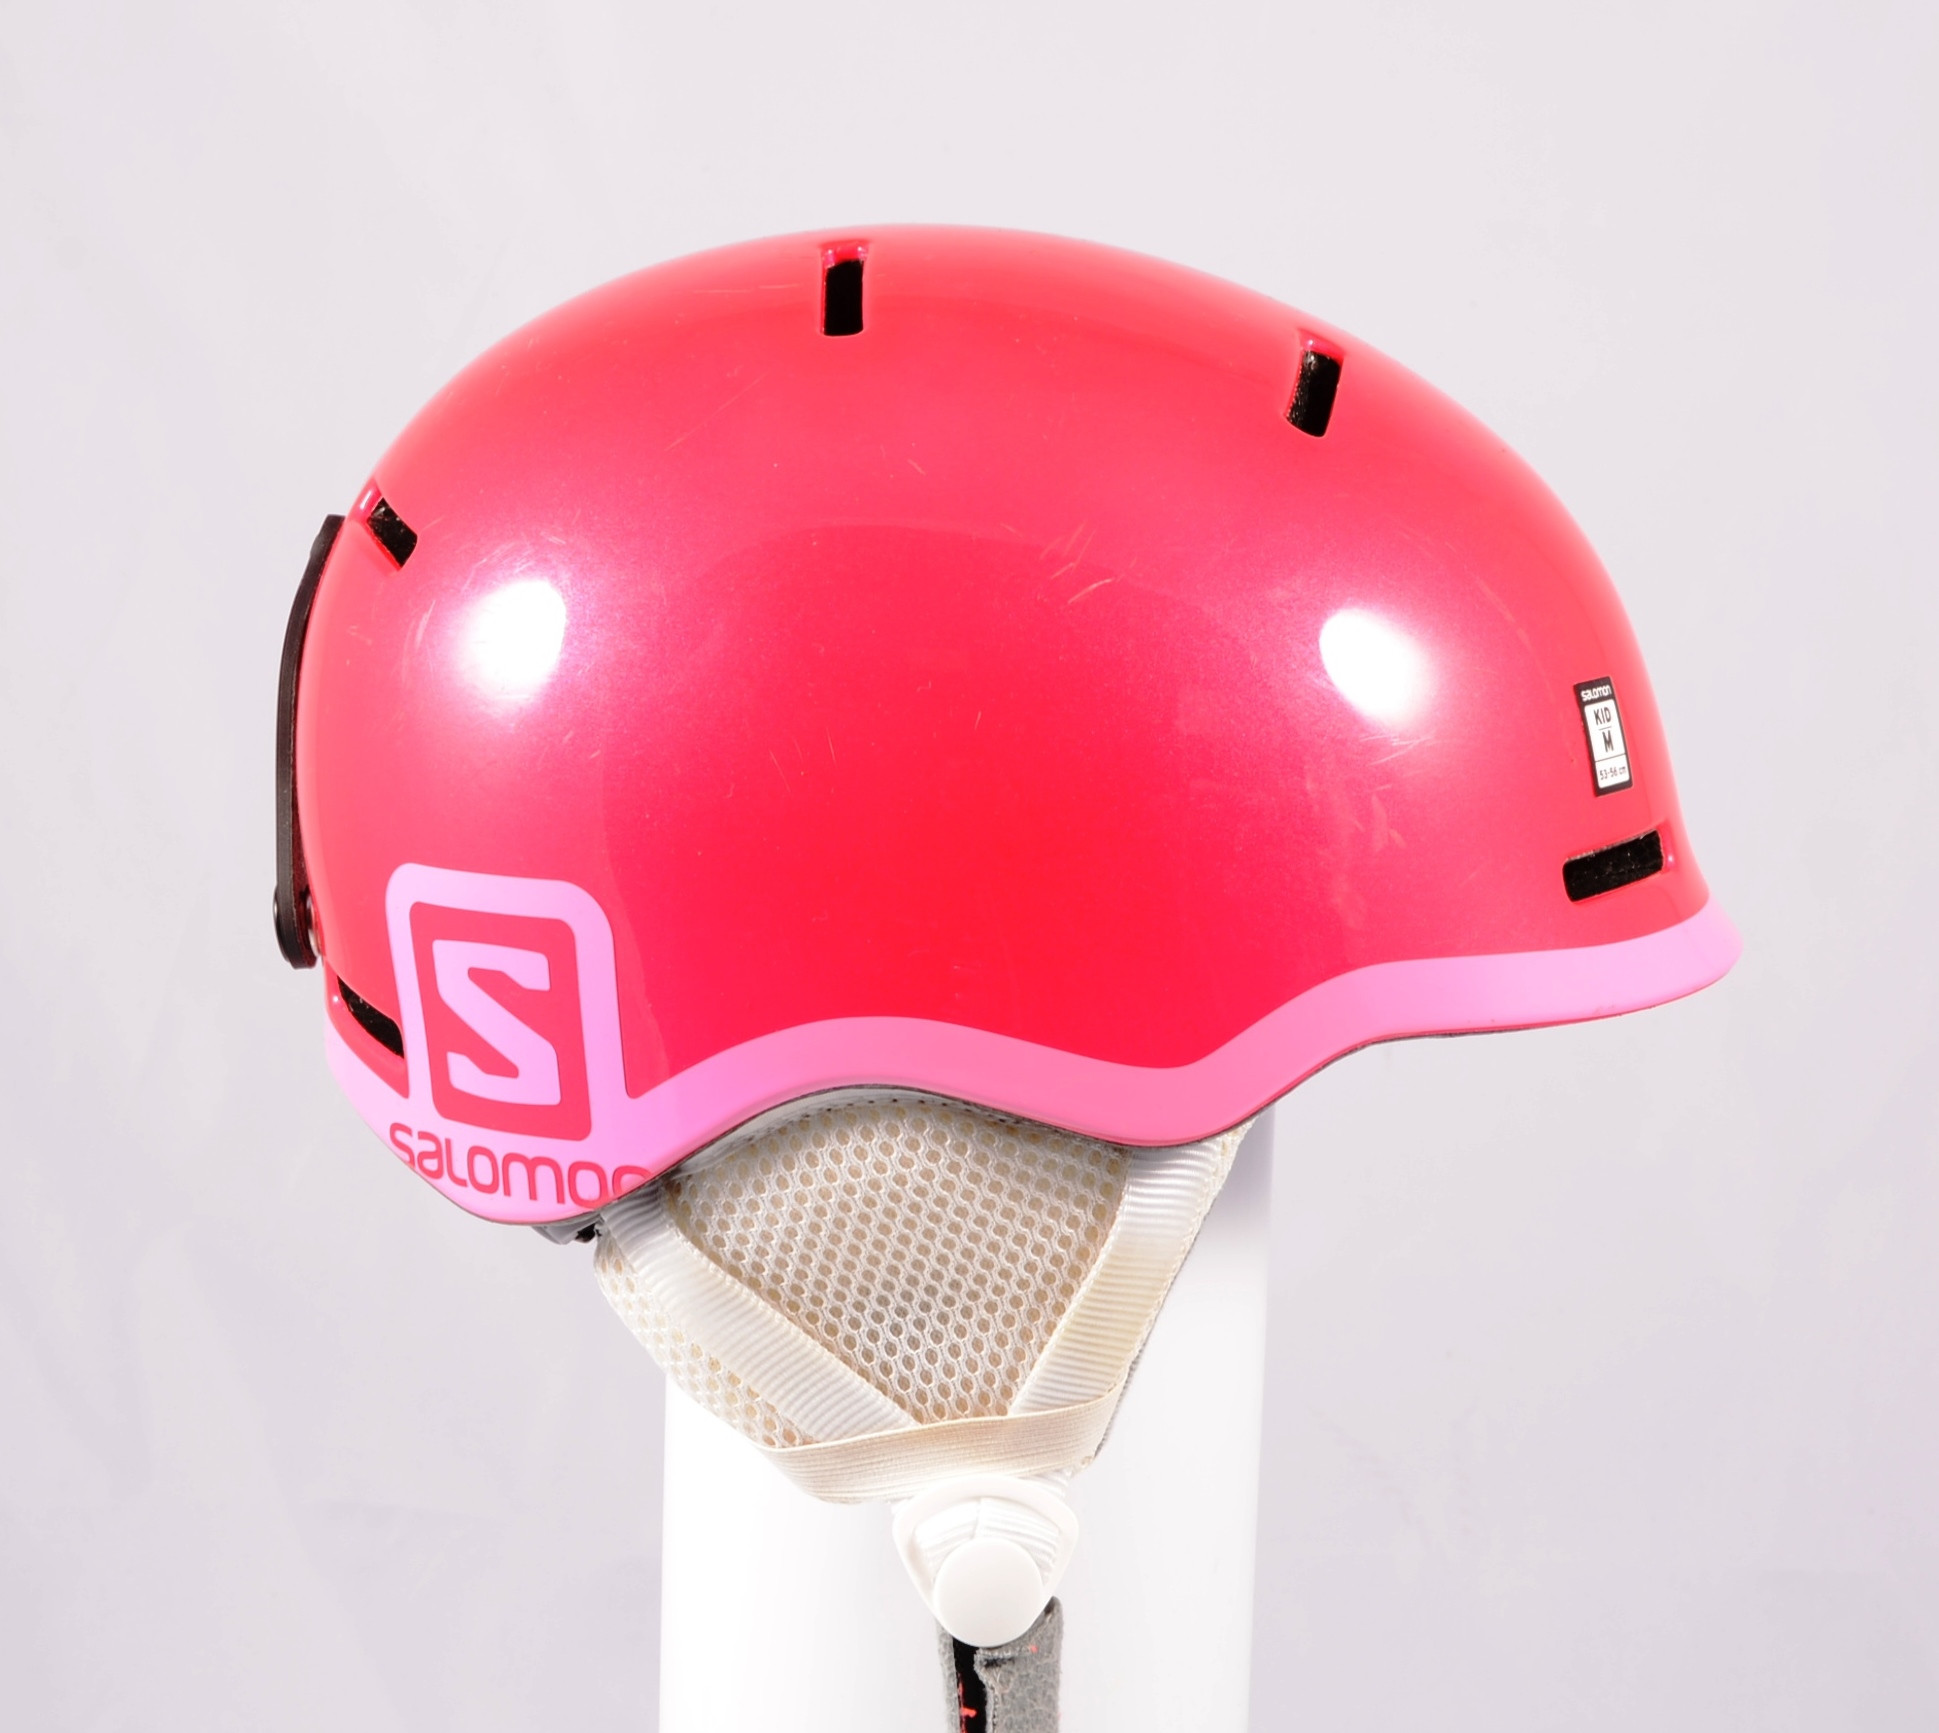 ski/snowboard SALOMON 2020, Pink, adjustable ( TOP condition ) - Mardosport.com